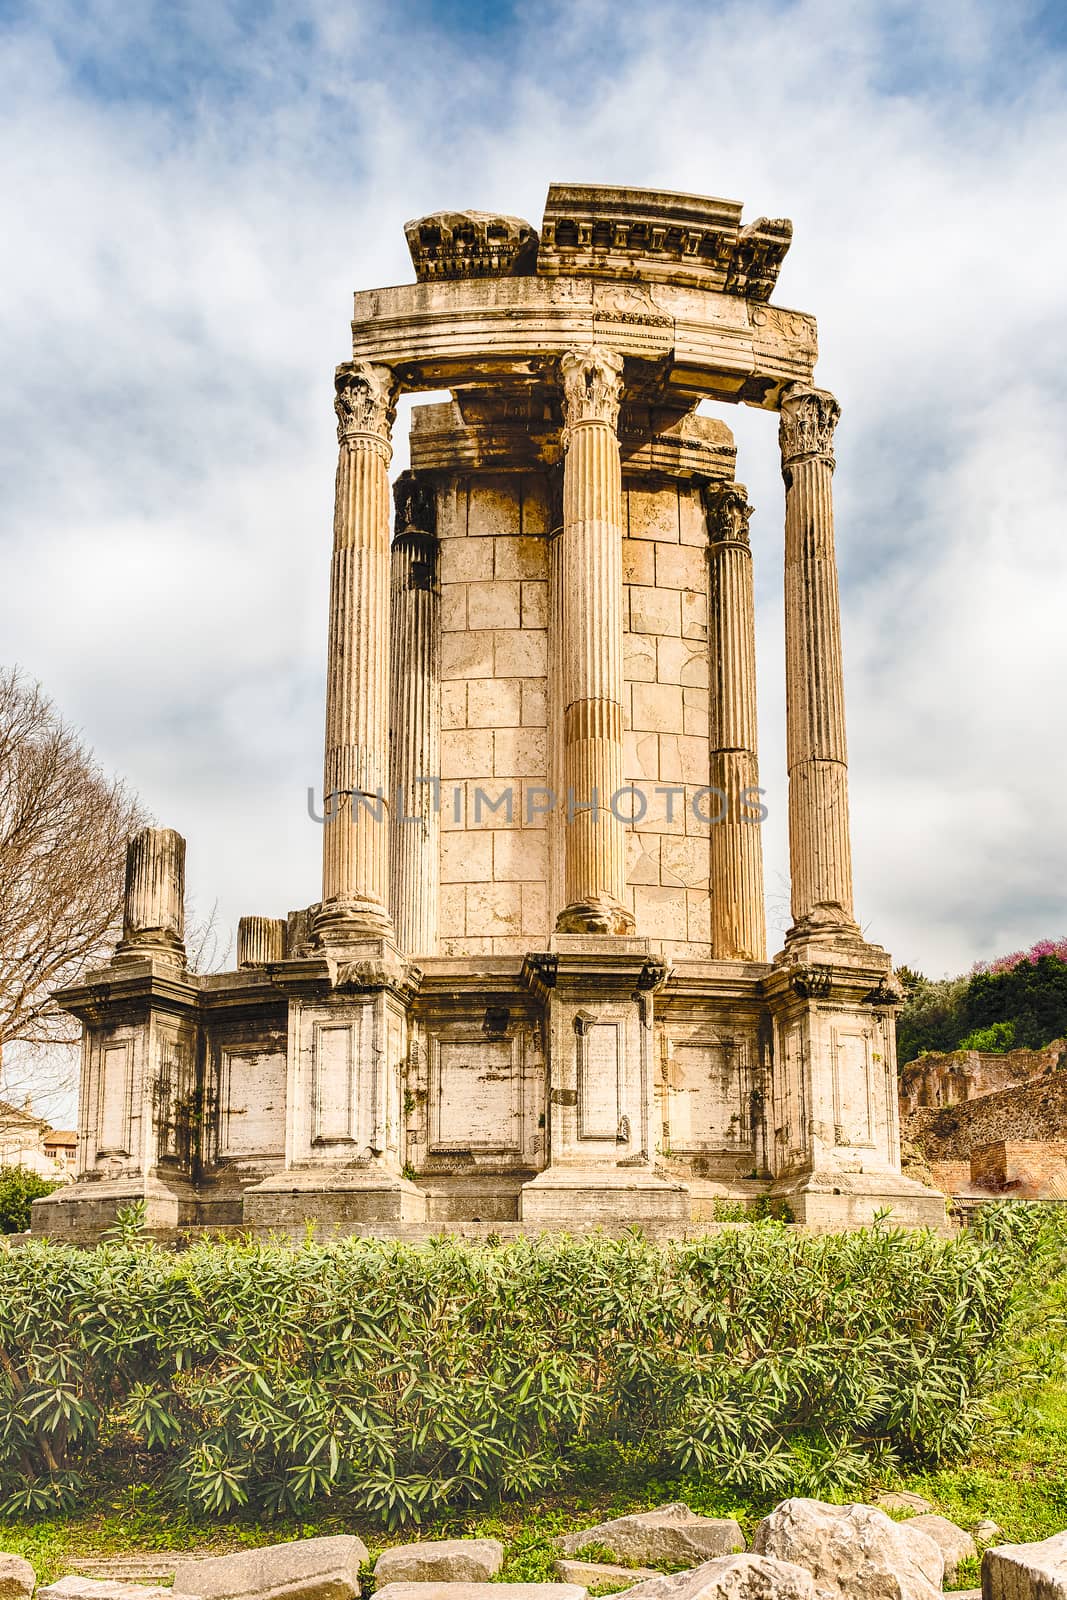 Ruins at Temple of Vesta in Roman Forum, Rome, Italy by marcorubino